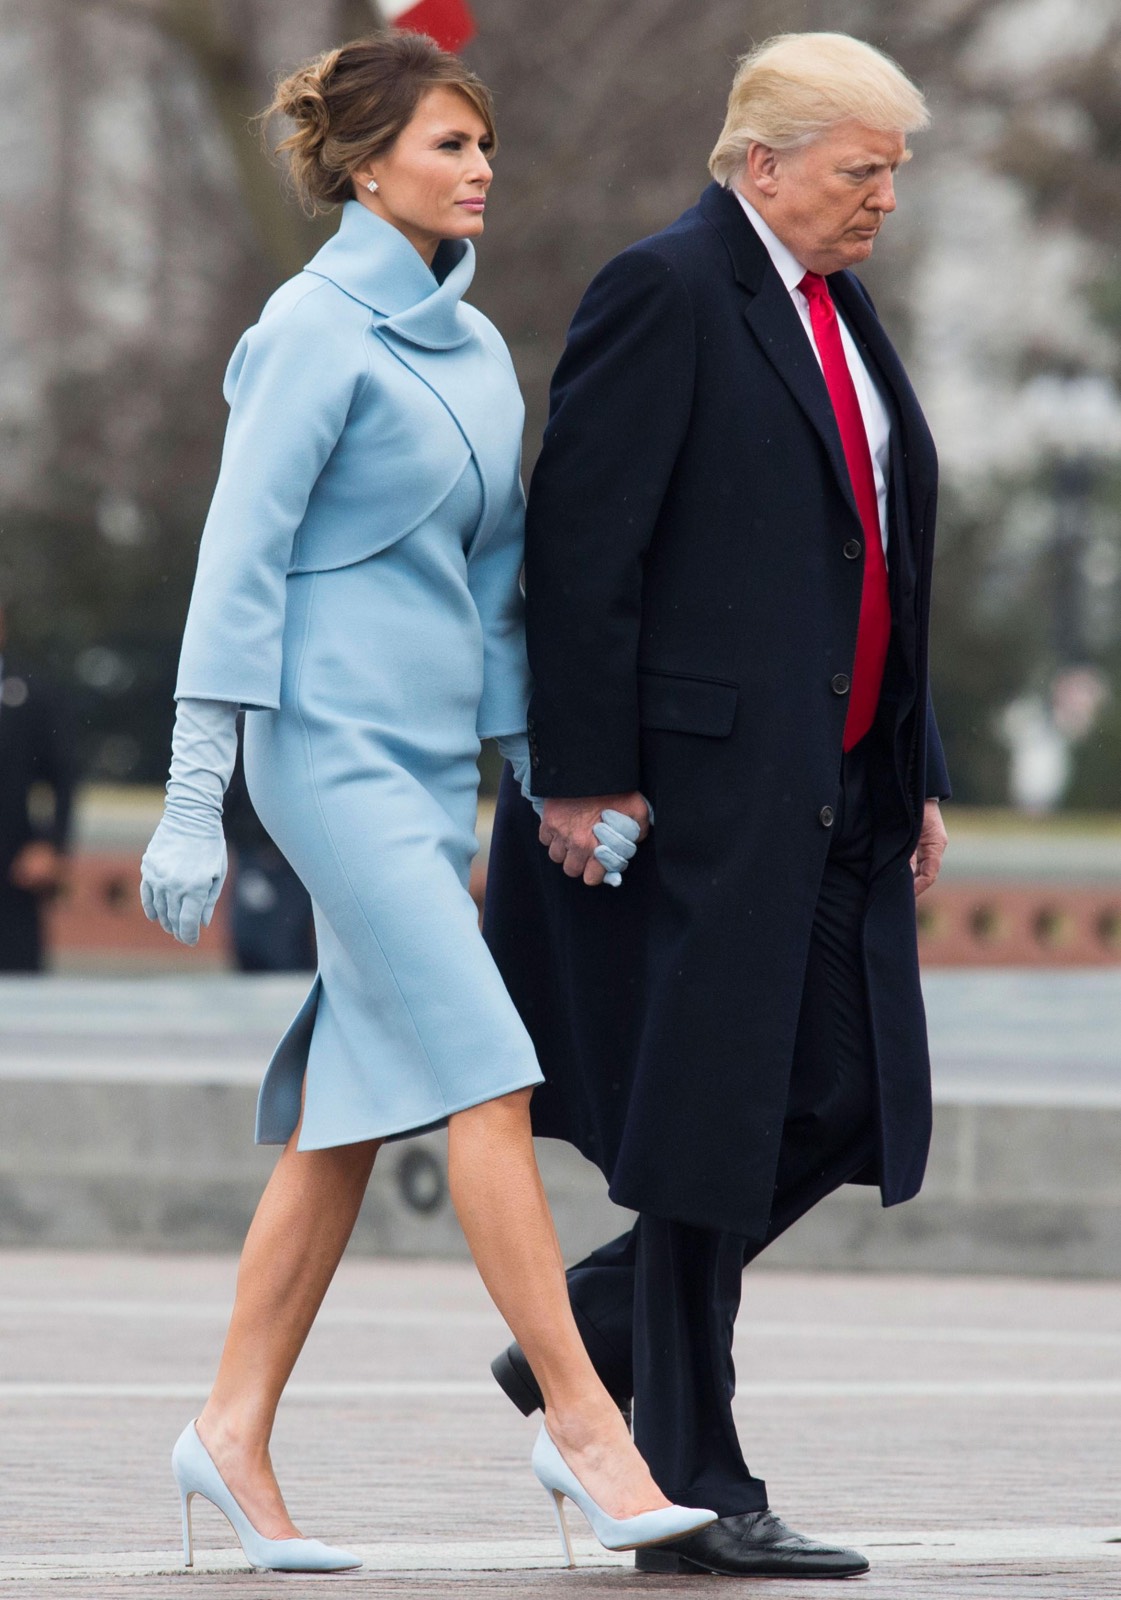 US President Donald Trump | AP Photo/Charlie Neibergall